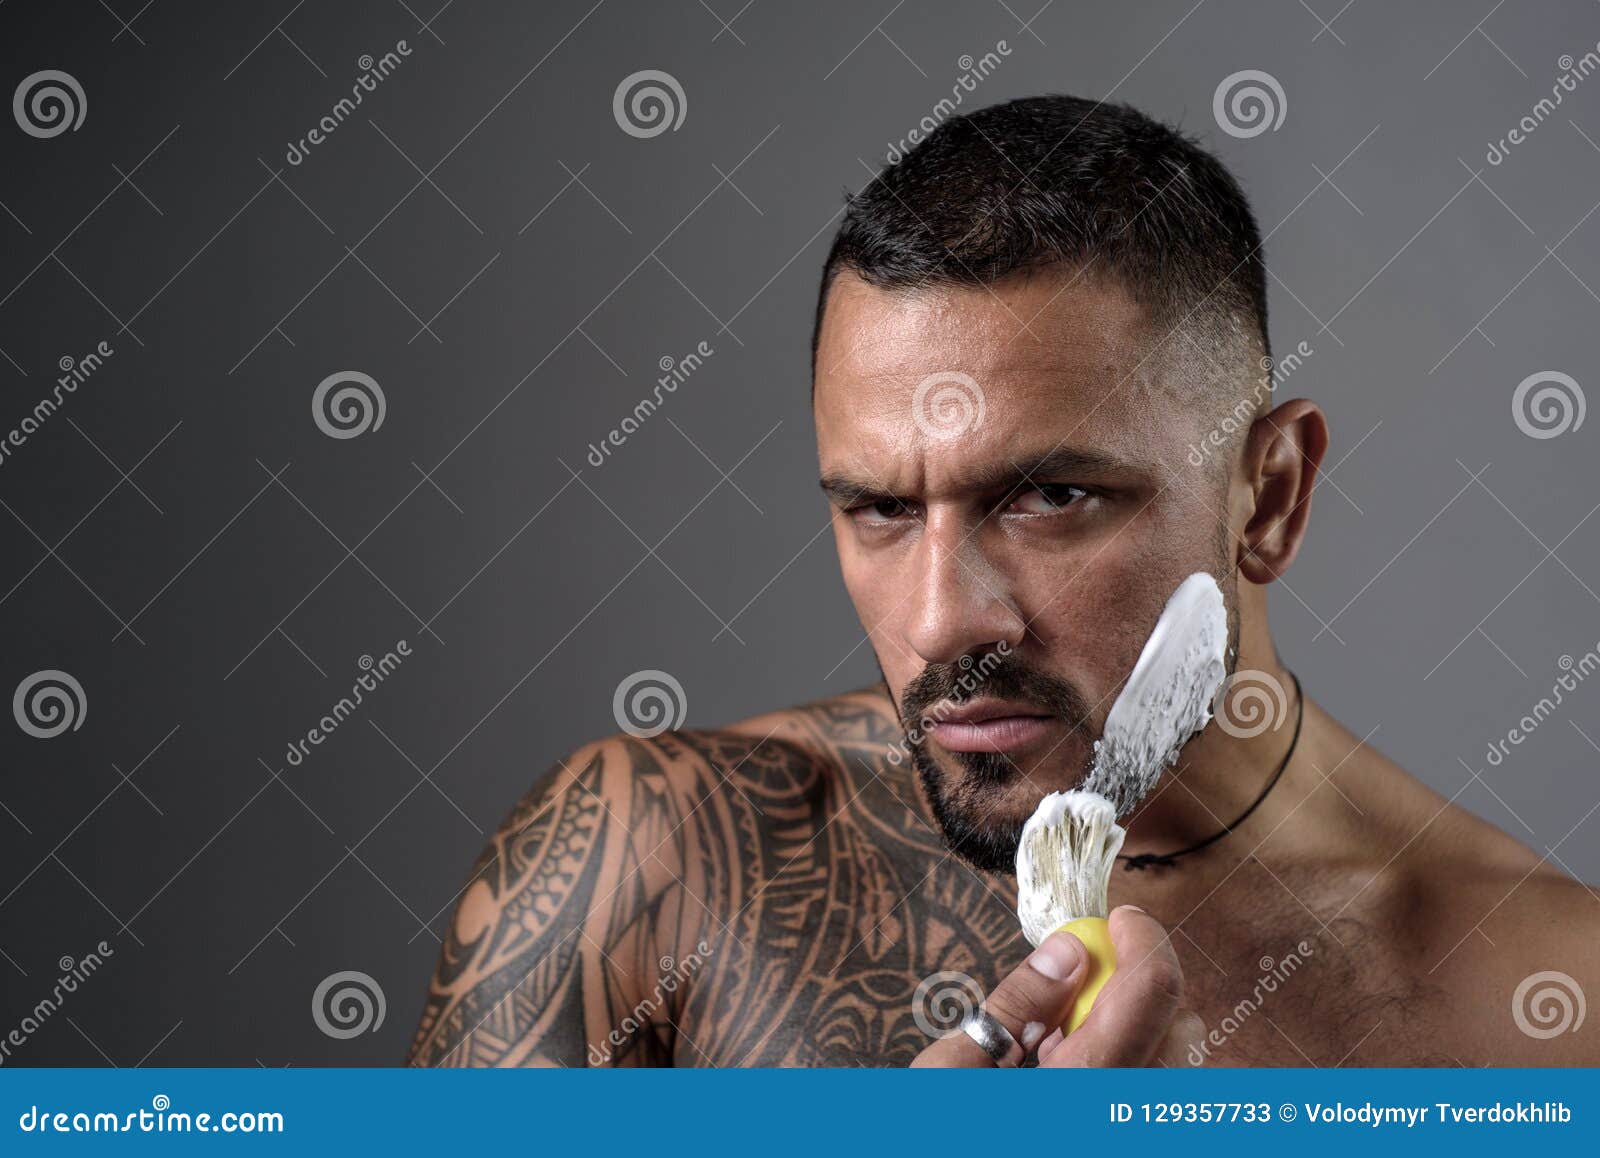 Latin Man Shaving. Beard Styling Cut. Ideas about Barbershop and ...